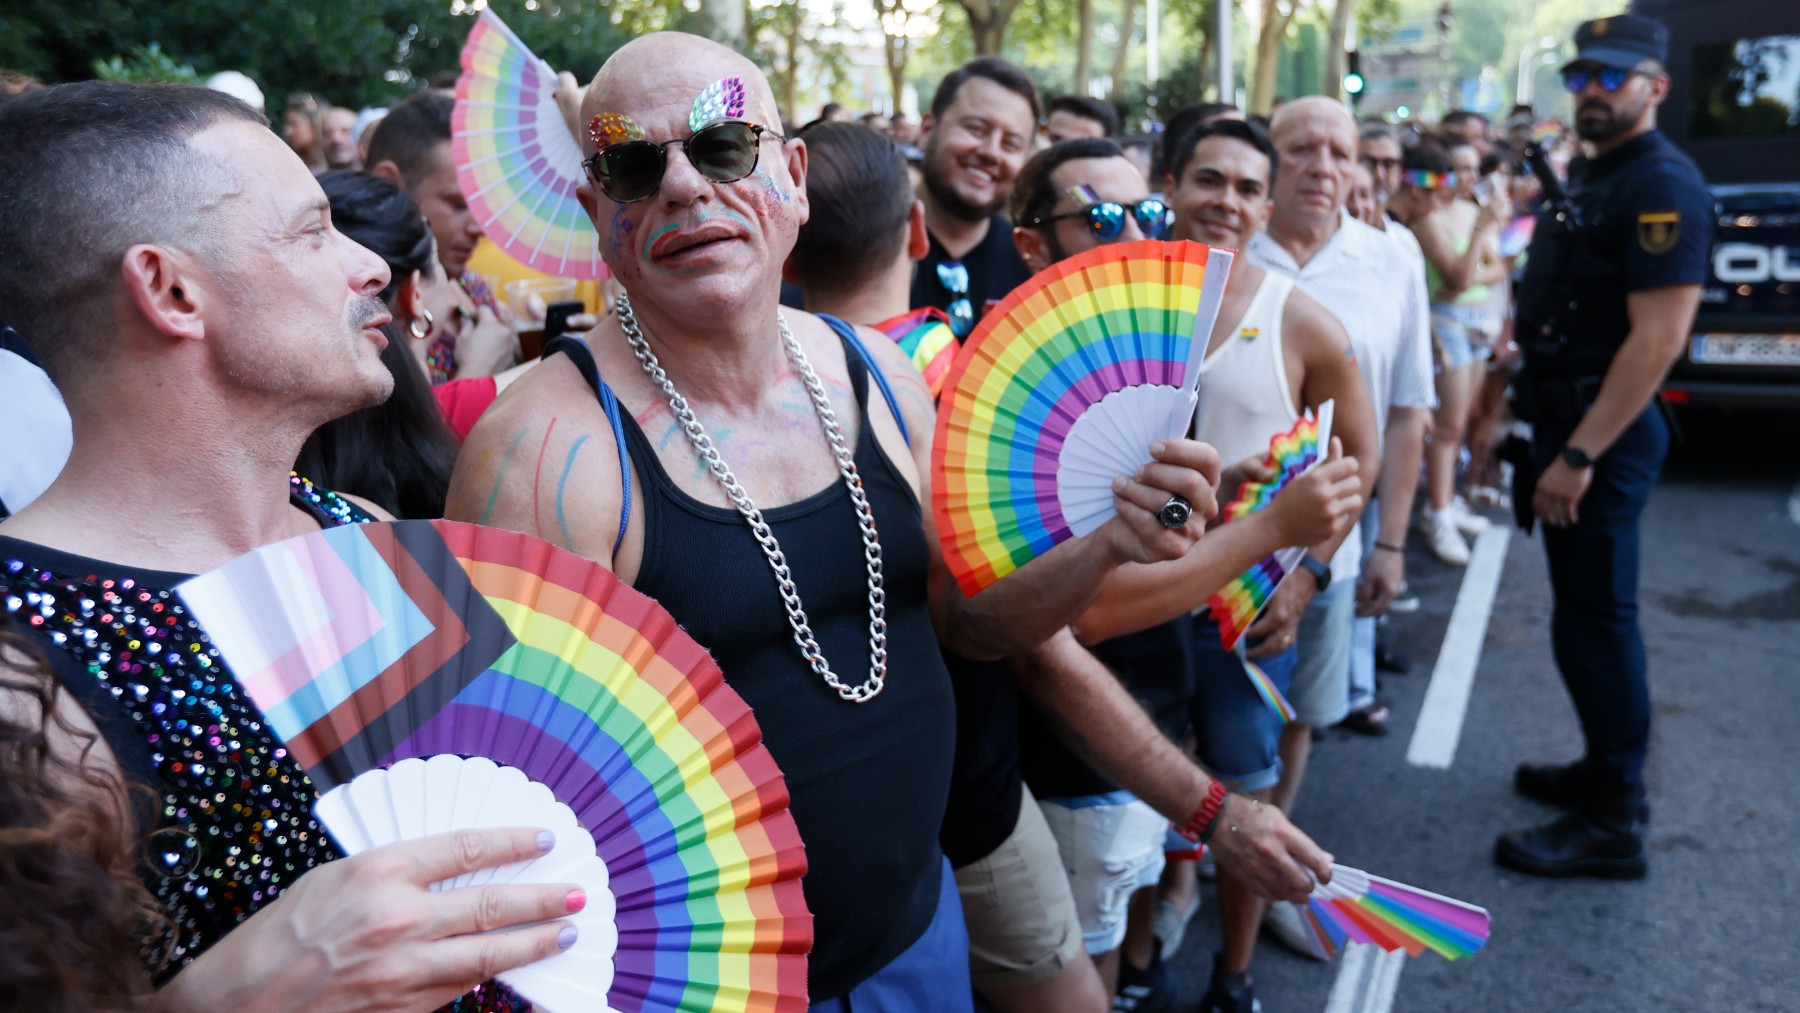 Orgullo Gay Madrid 